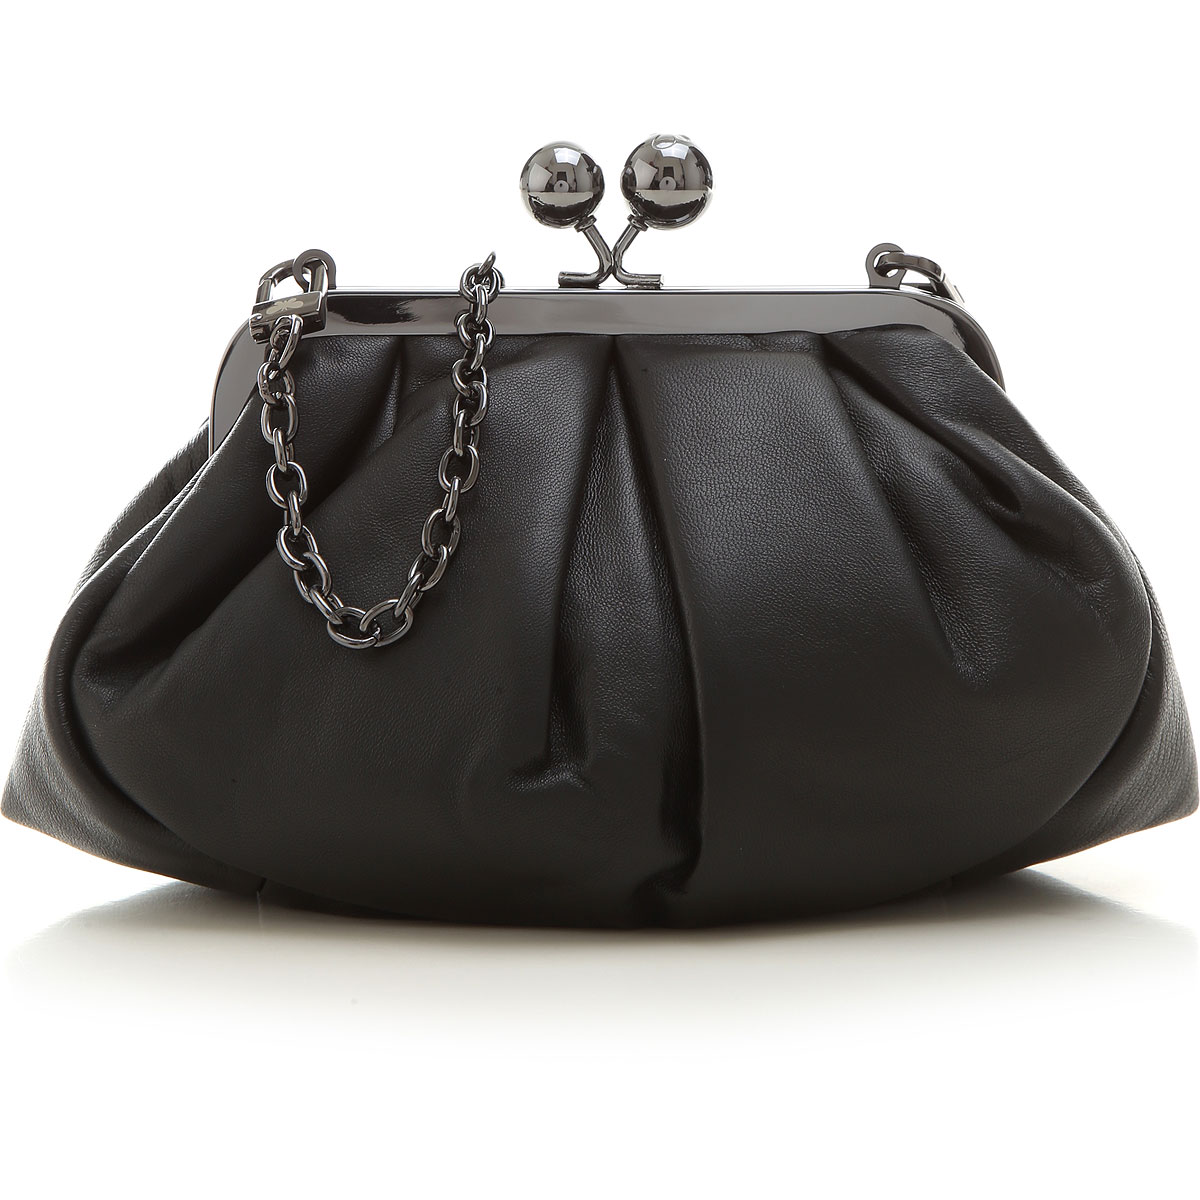 Handbags Max Mara, Style code: 55110112-600-007